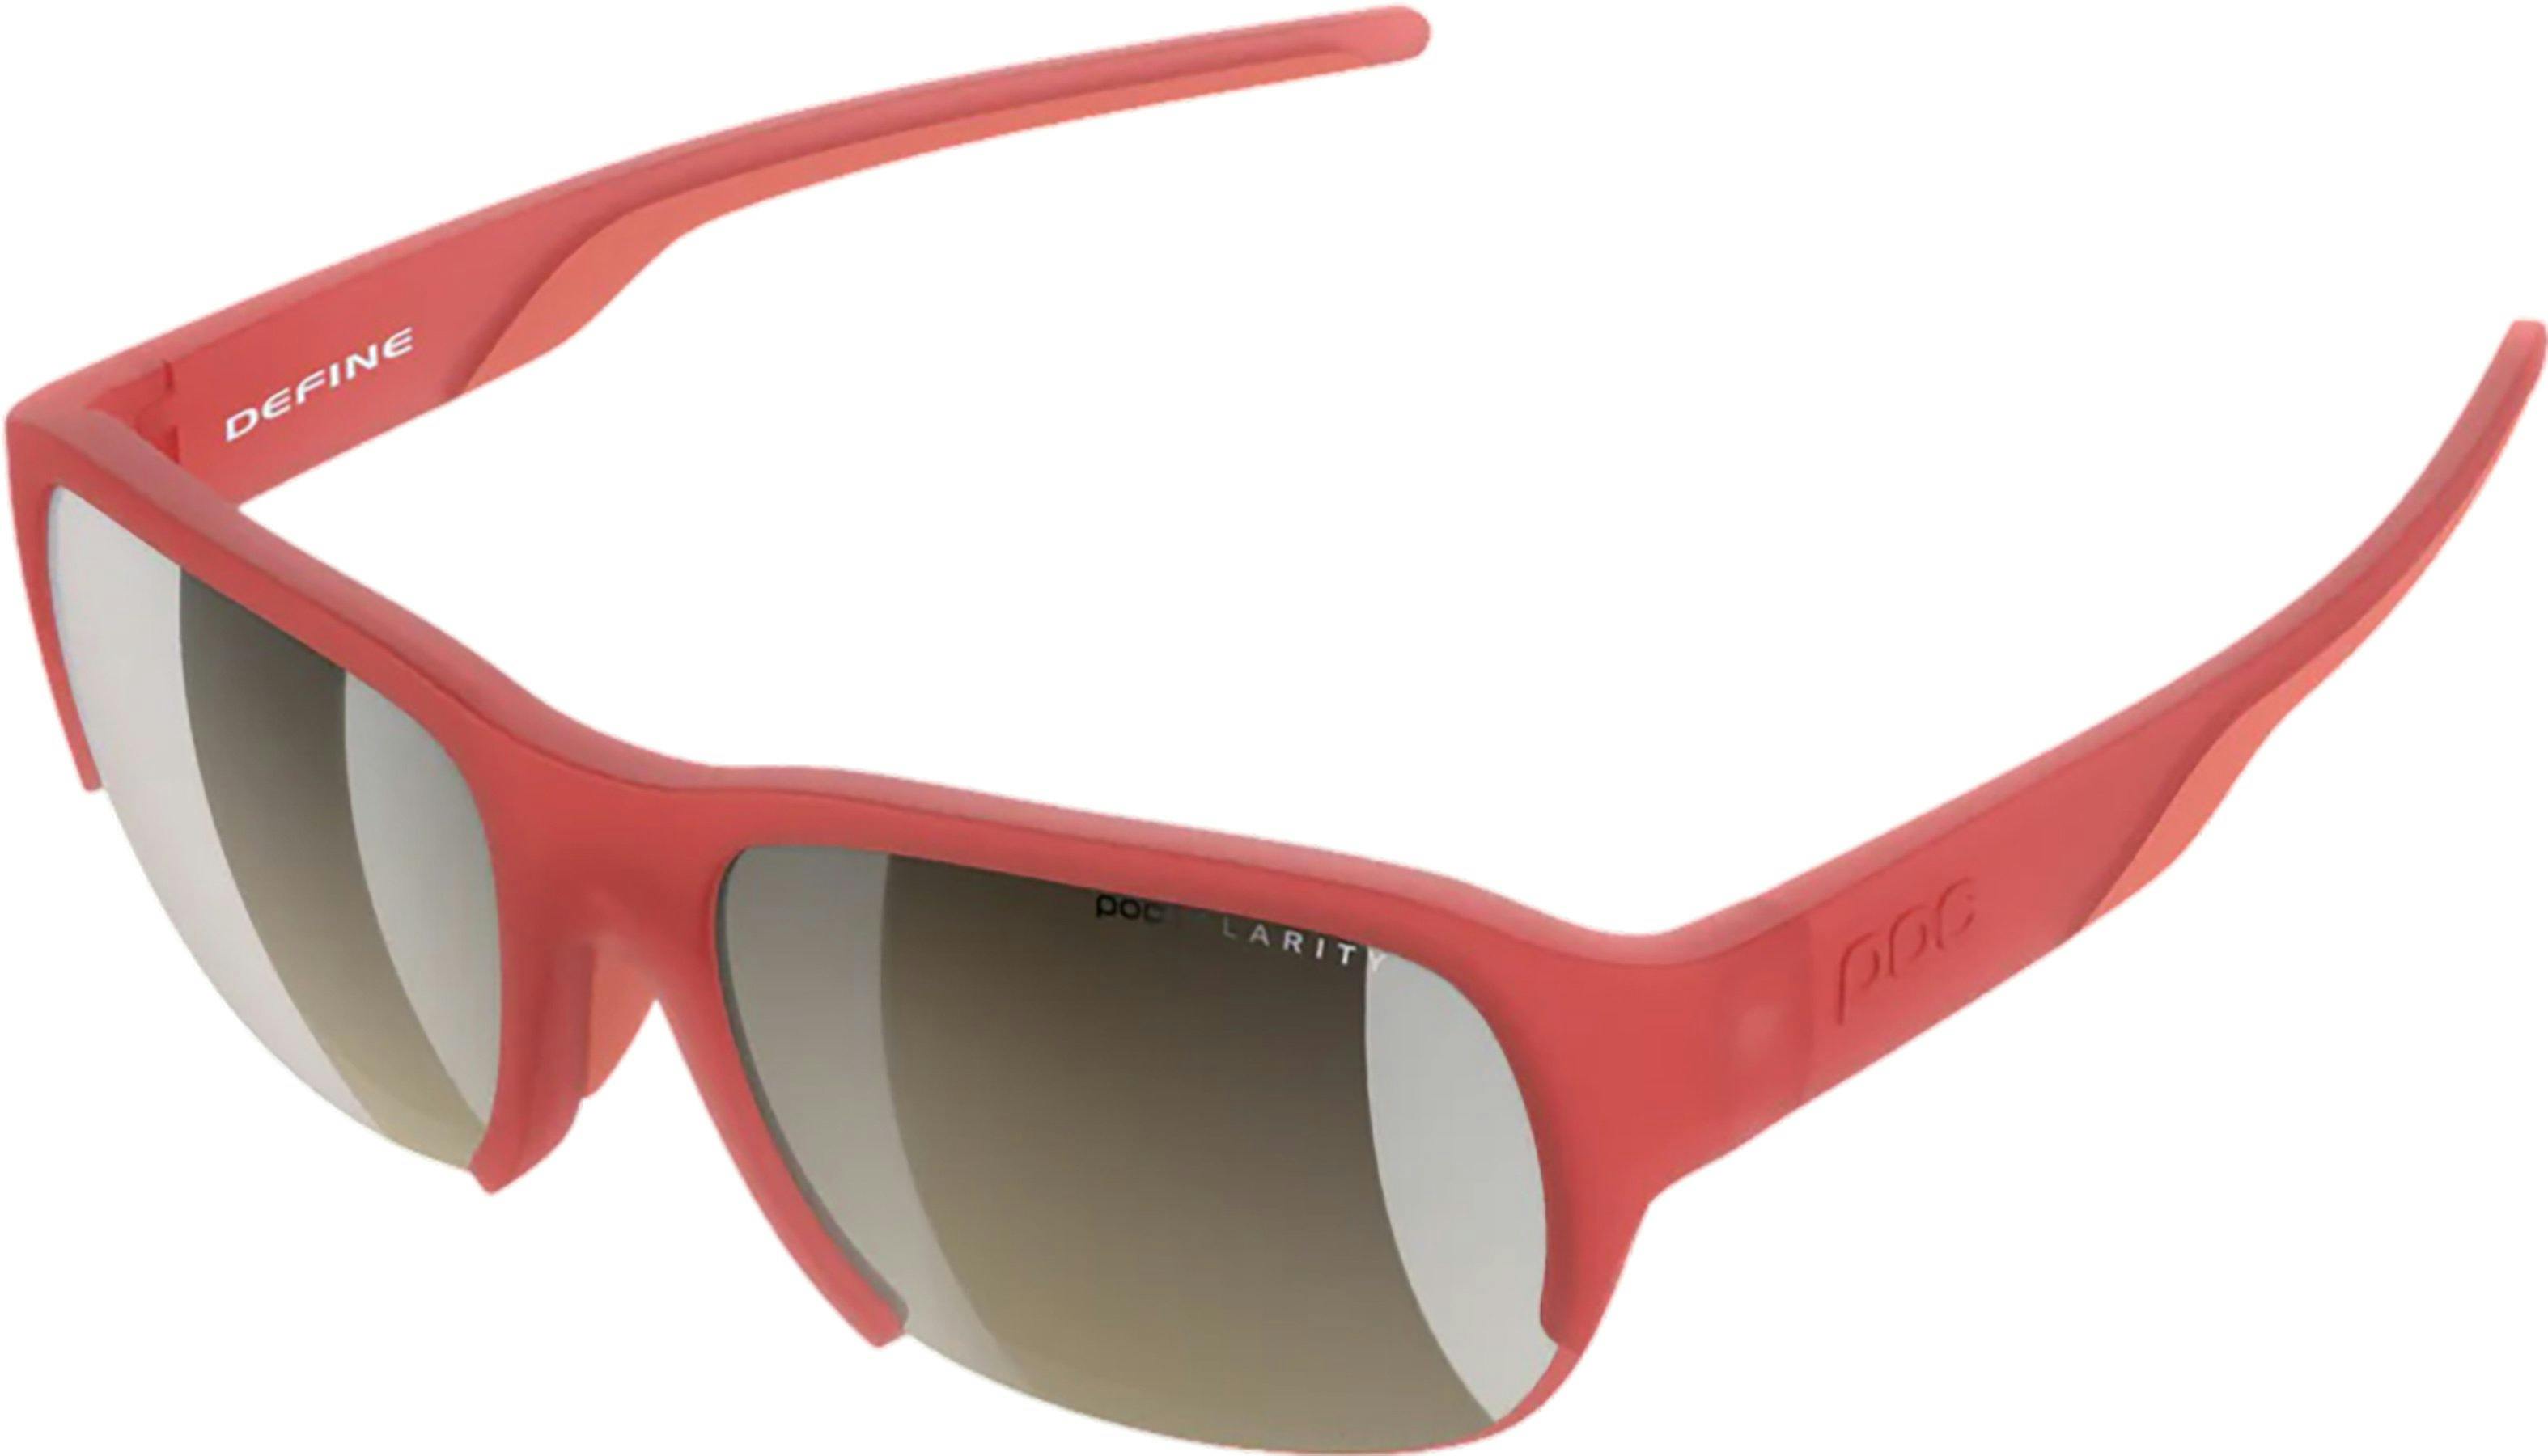 Product image for Define Sunglasses - Unisex